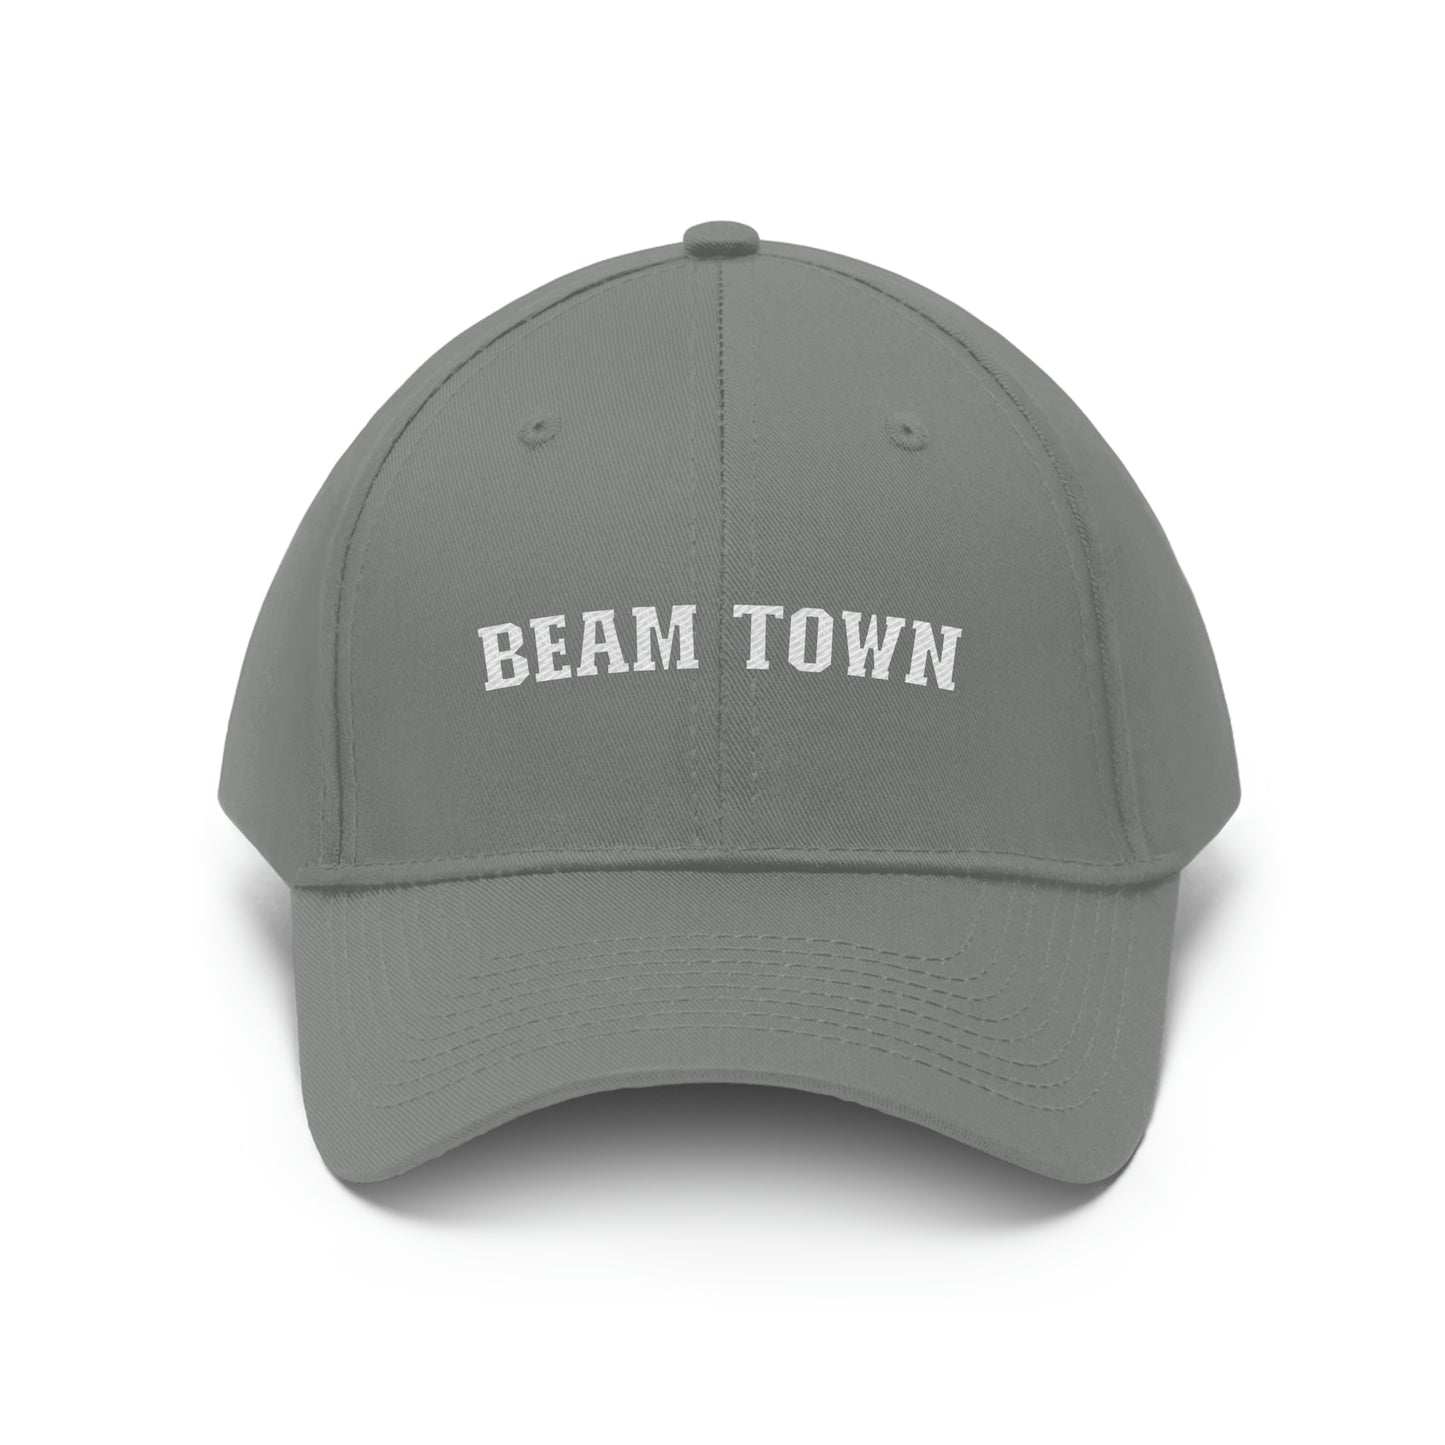 OG Beam Town Embroidered Hat, Embroidered Sacramento Dad Baseball Cap, Sacramento Basketball Team Fan Gift, Gift for Sac Beam Town Fan, Sacramento